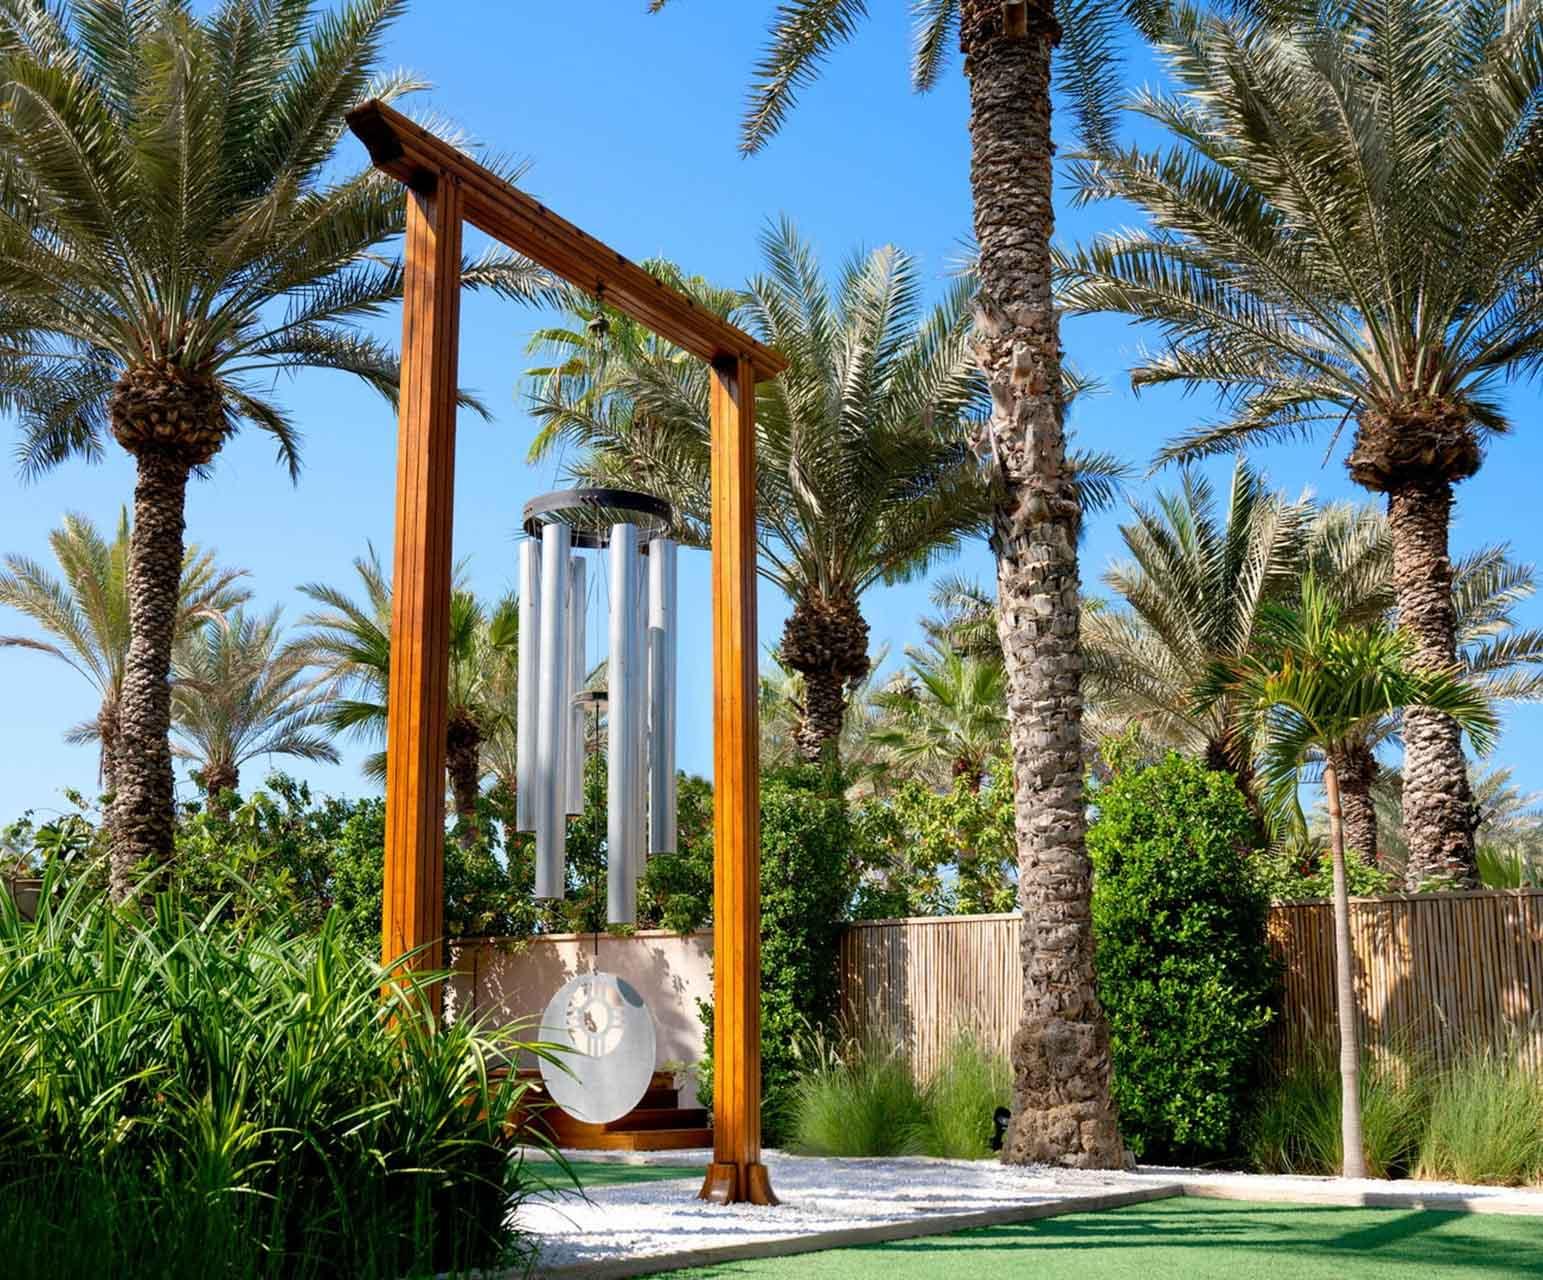 Le jardin où pratiquer le yoga © Madinat Jumeirah